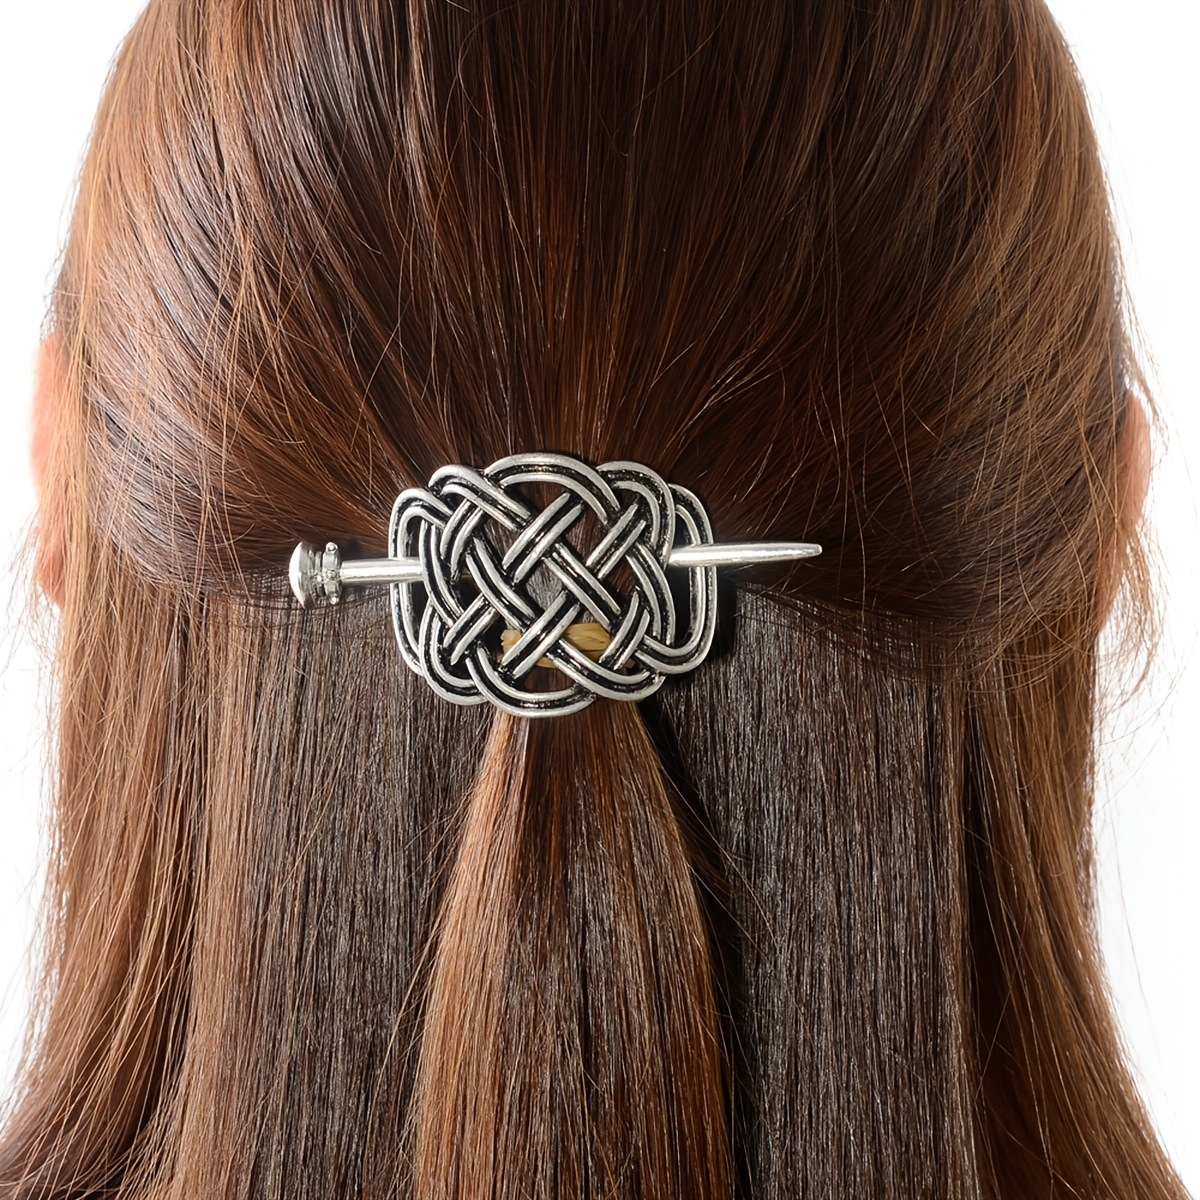 Celtic Knot Hair Accessories Norse Hair Pin Viking Hair Clip for